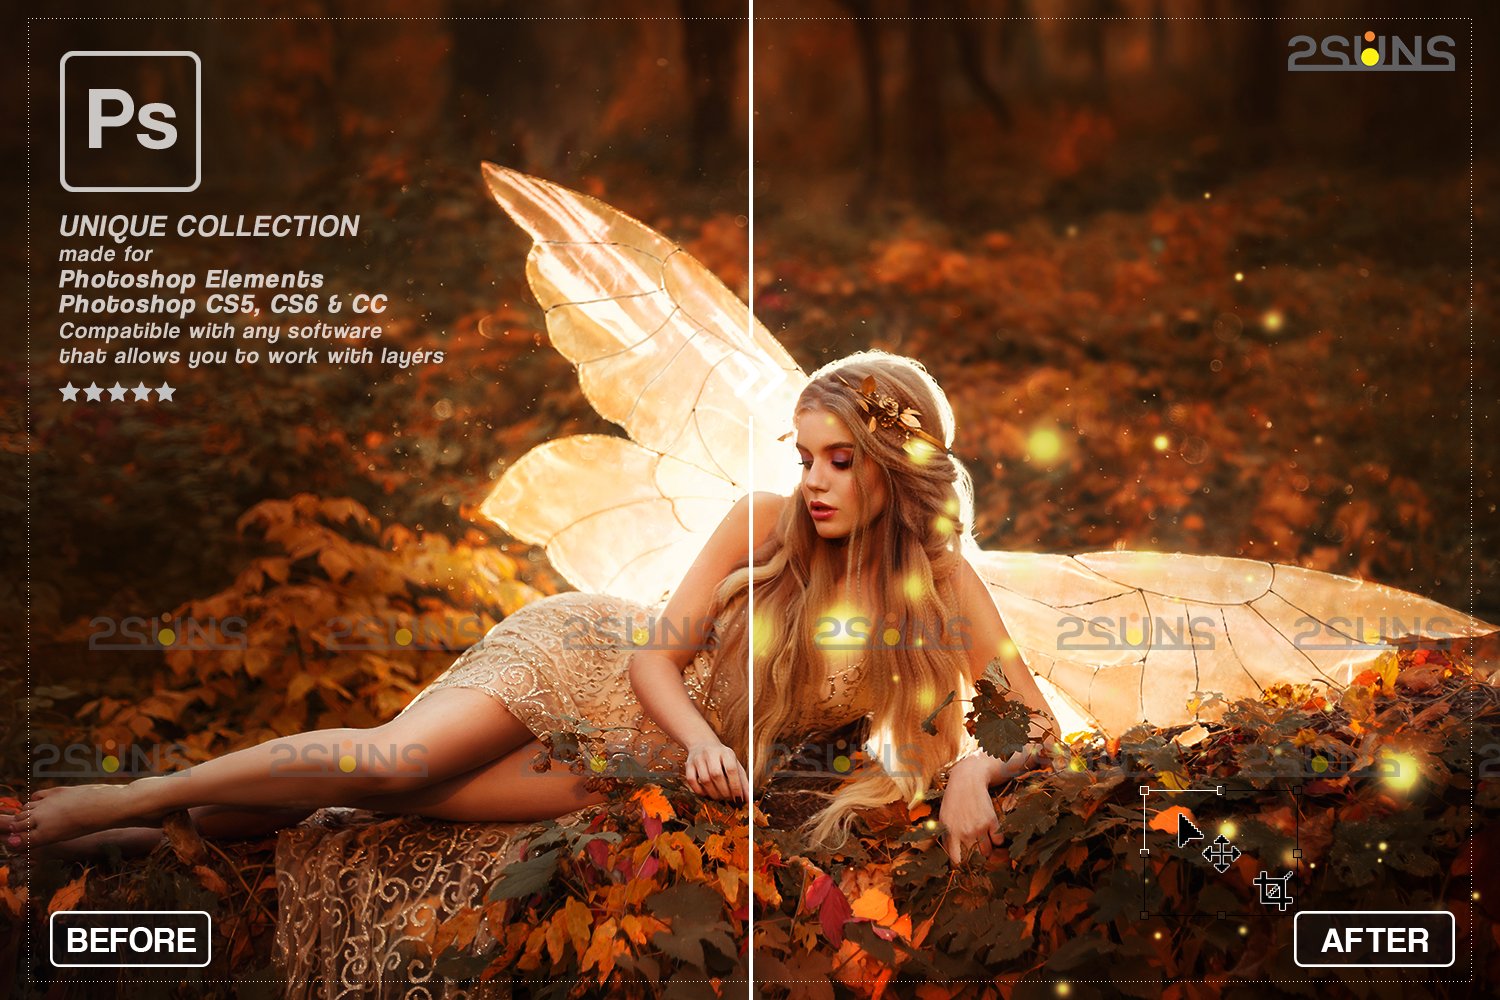 Gold Fireflies Photoshop overlay 7394445